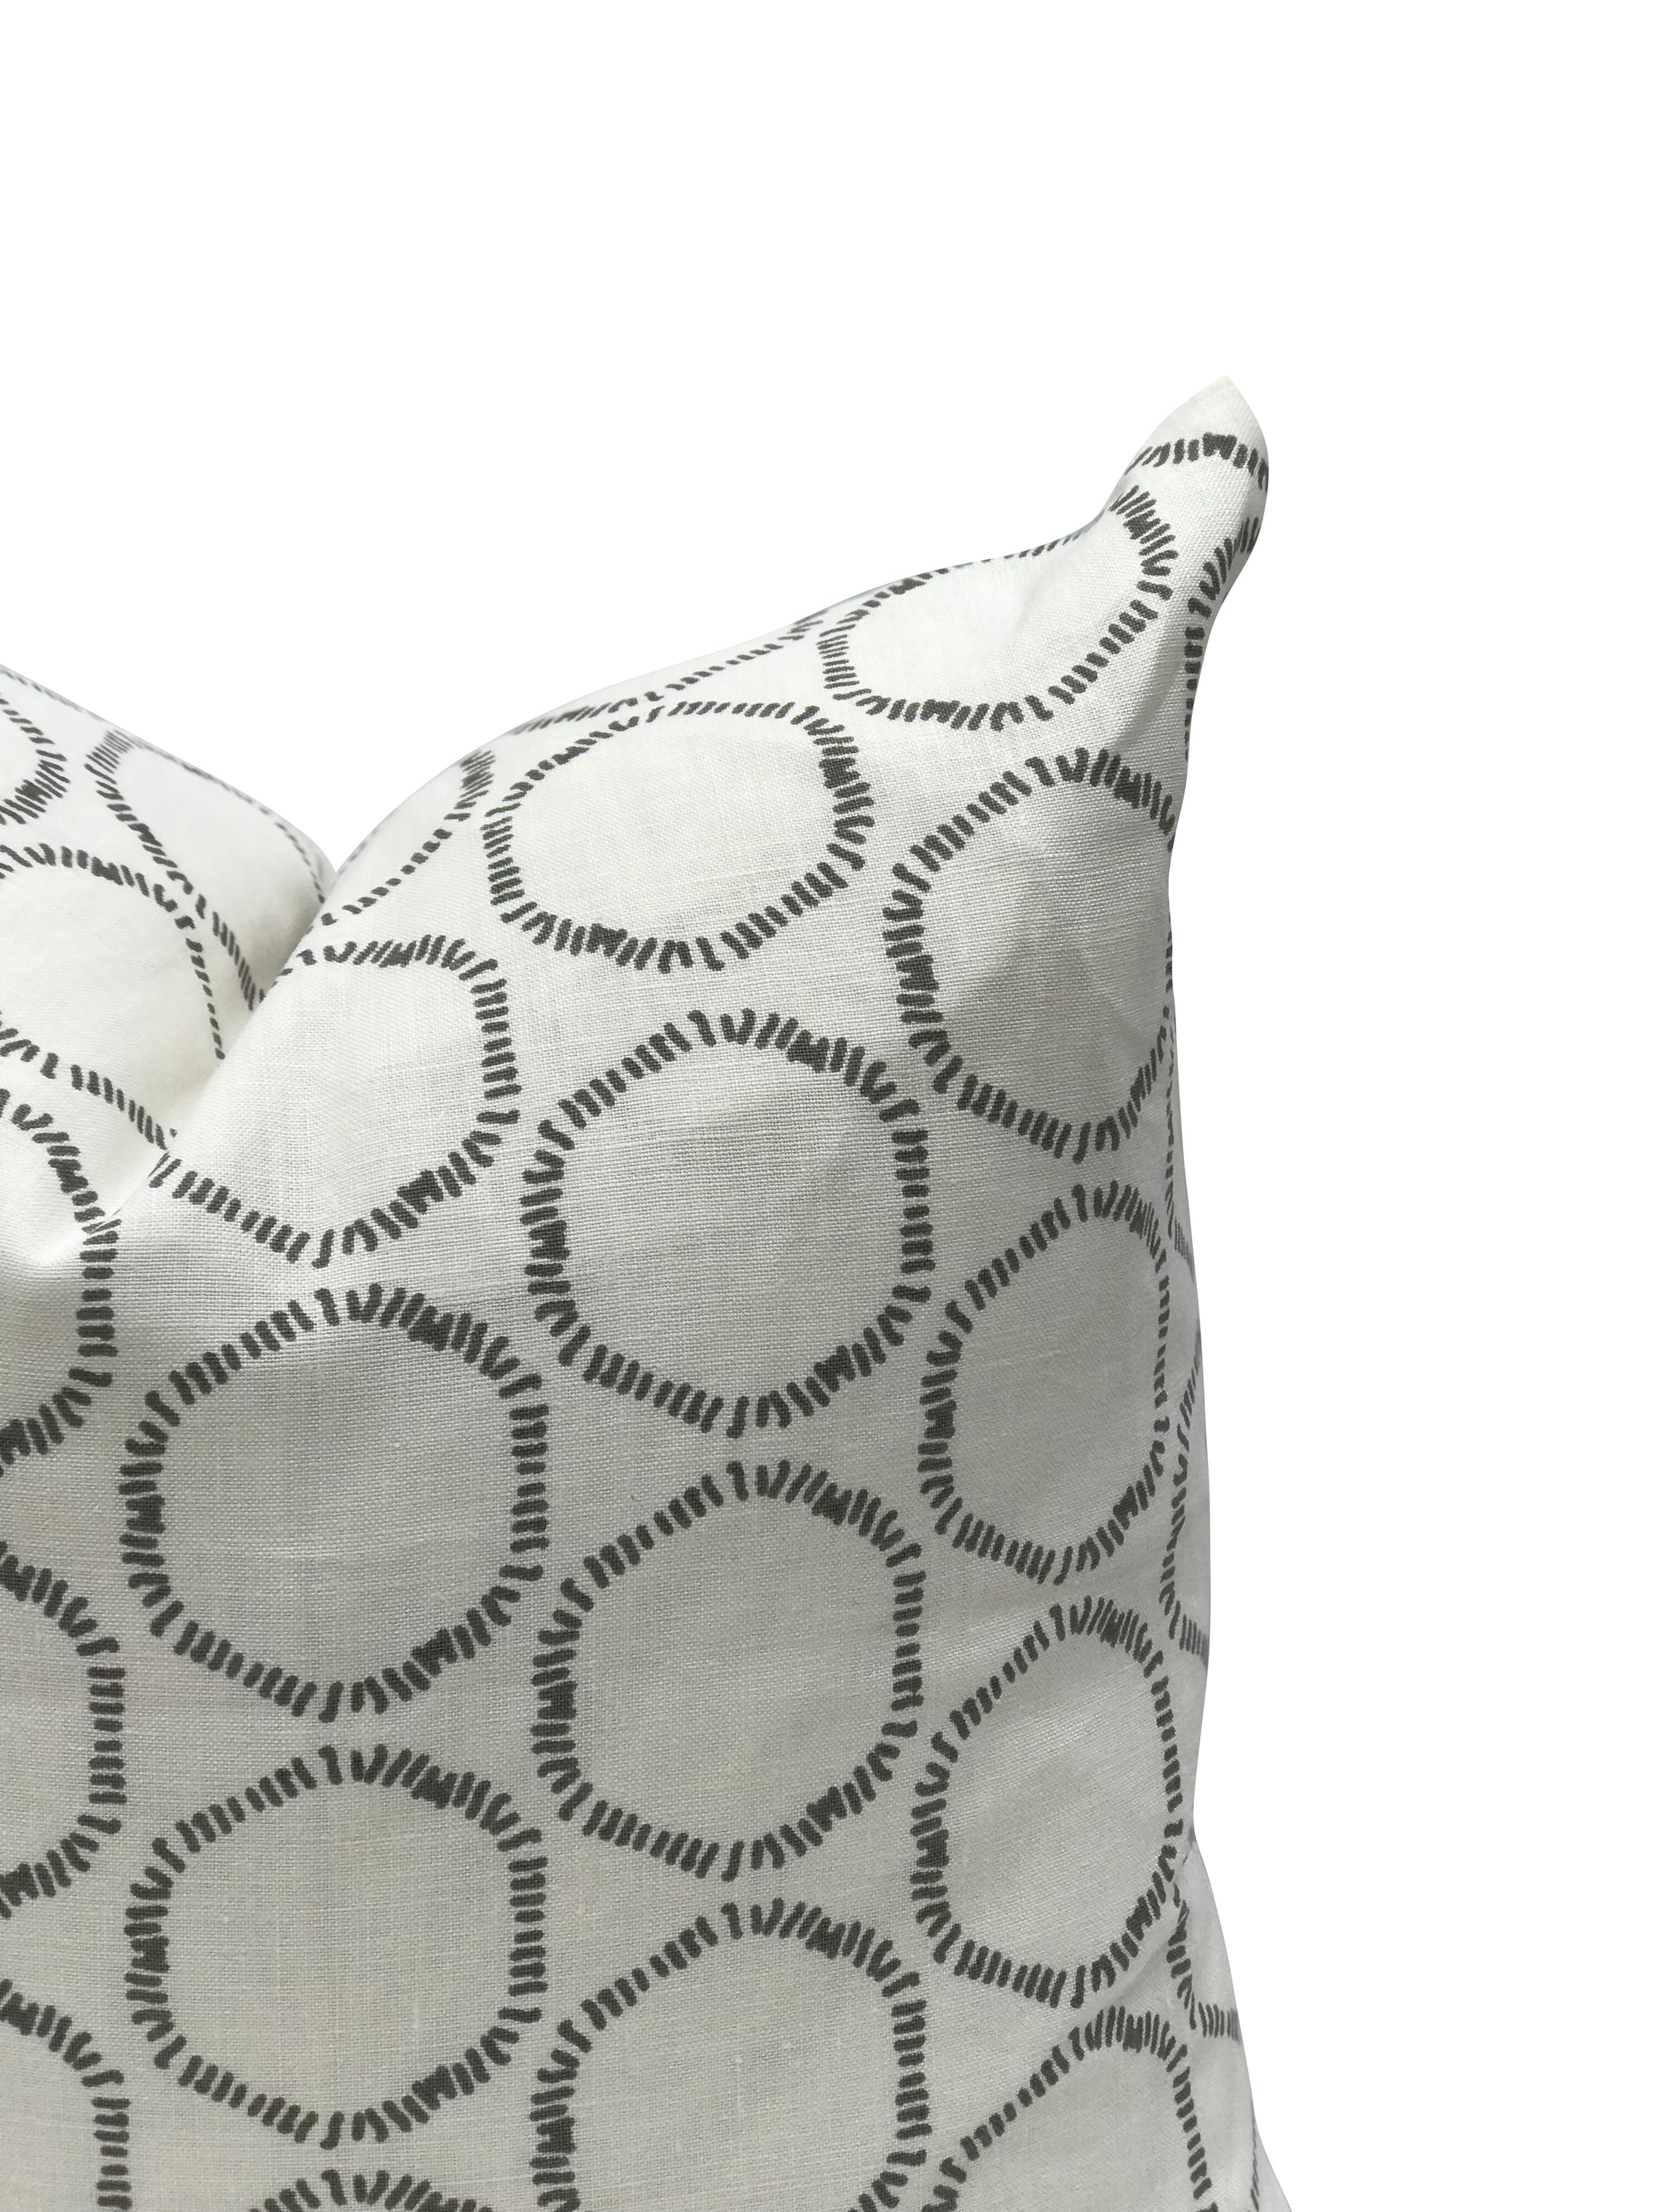 Cape pillow in Dove on Oyster linen greige textiles greige design shop + interiors